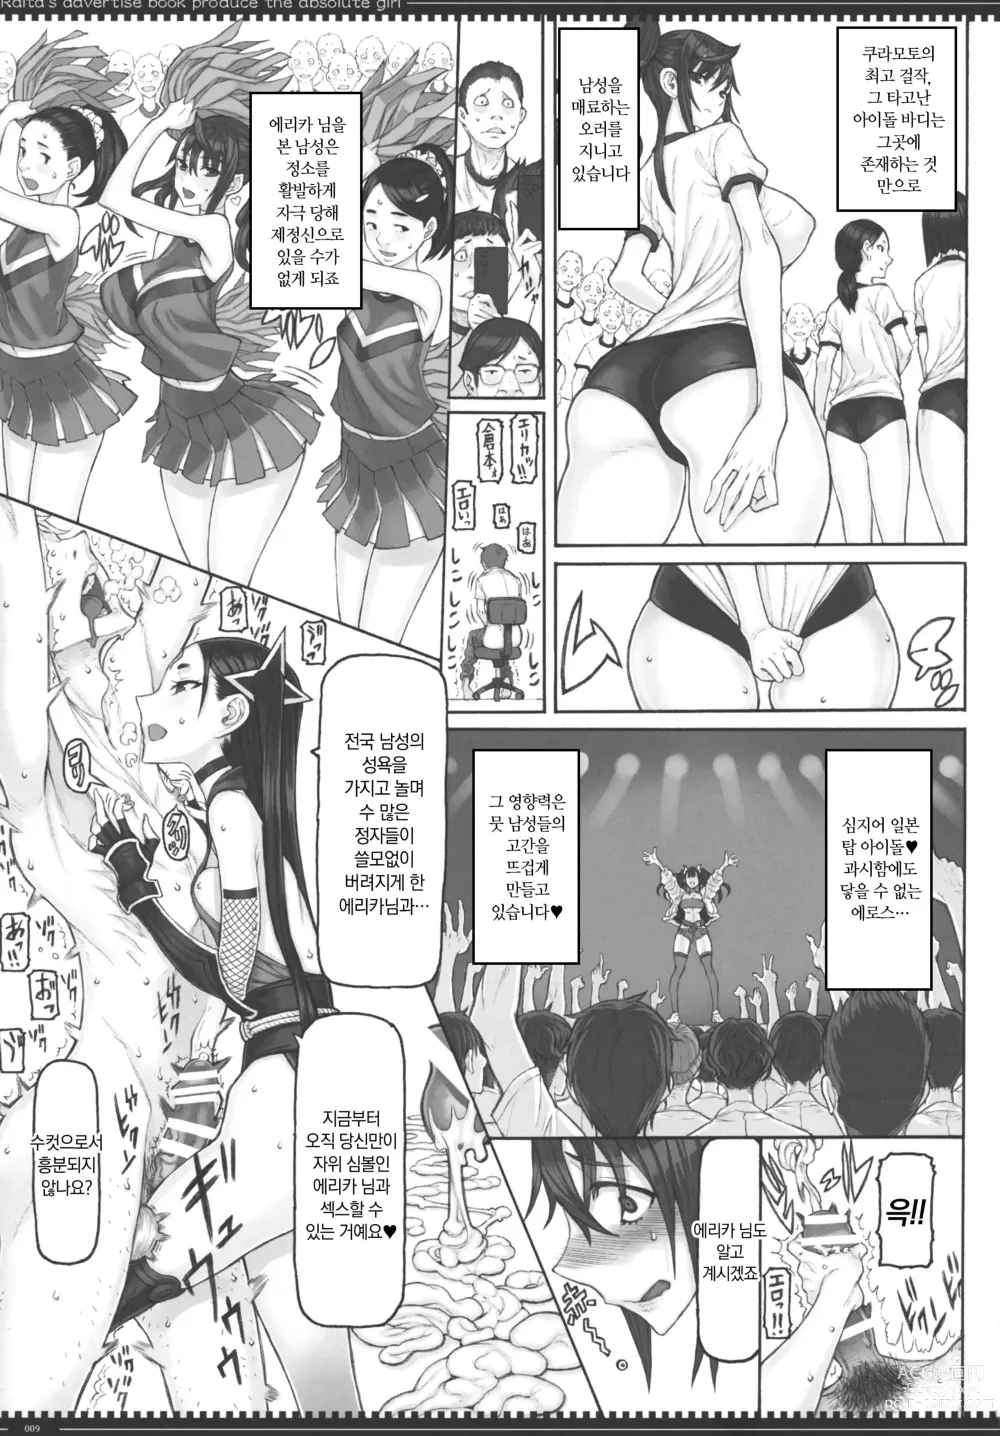 Page 8 of doujinshi 마법소녀 22.0 + C101 회장 한정본